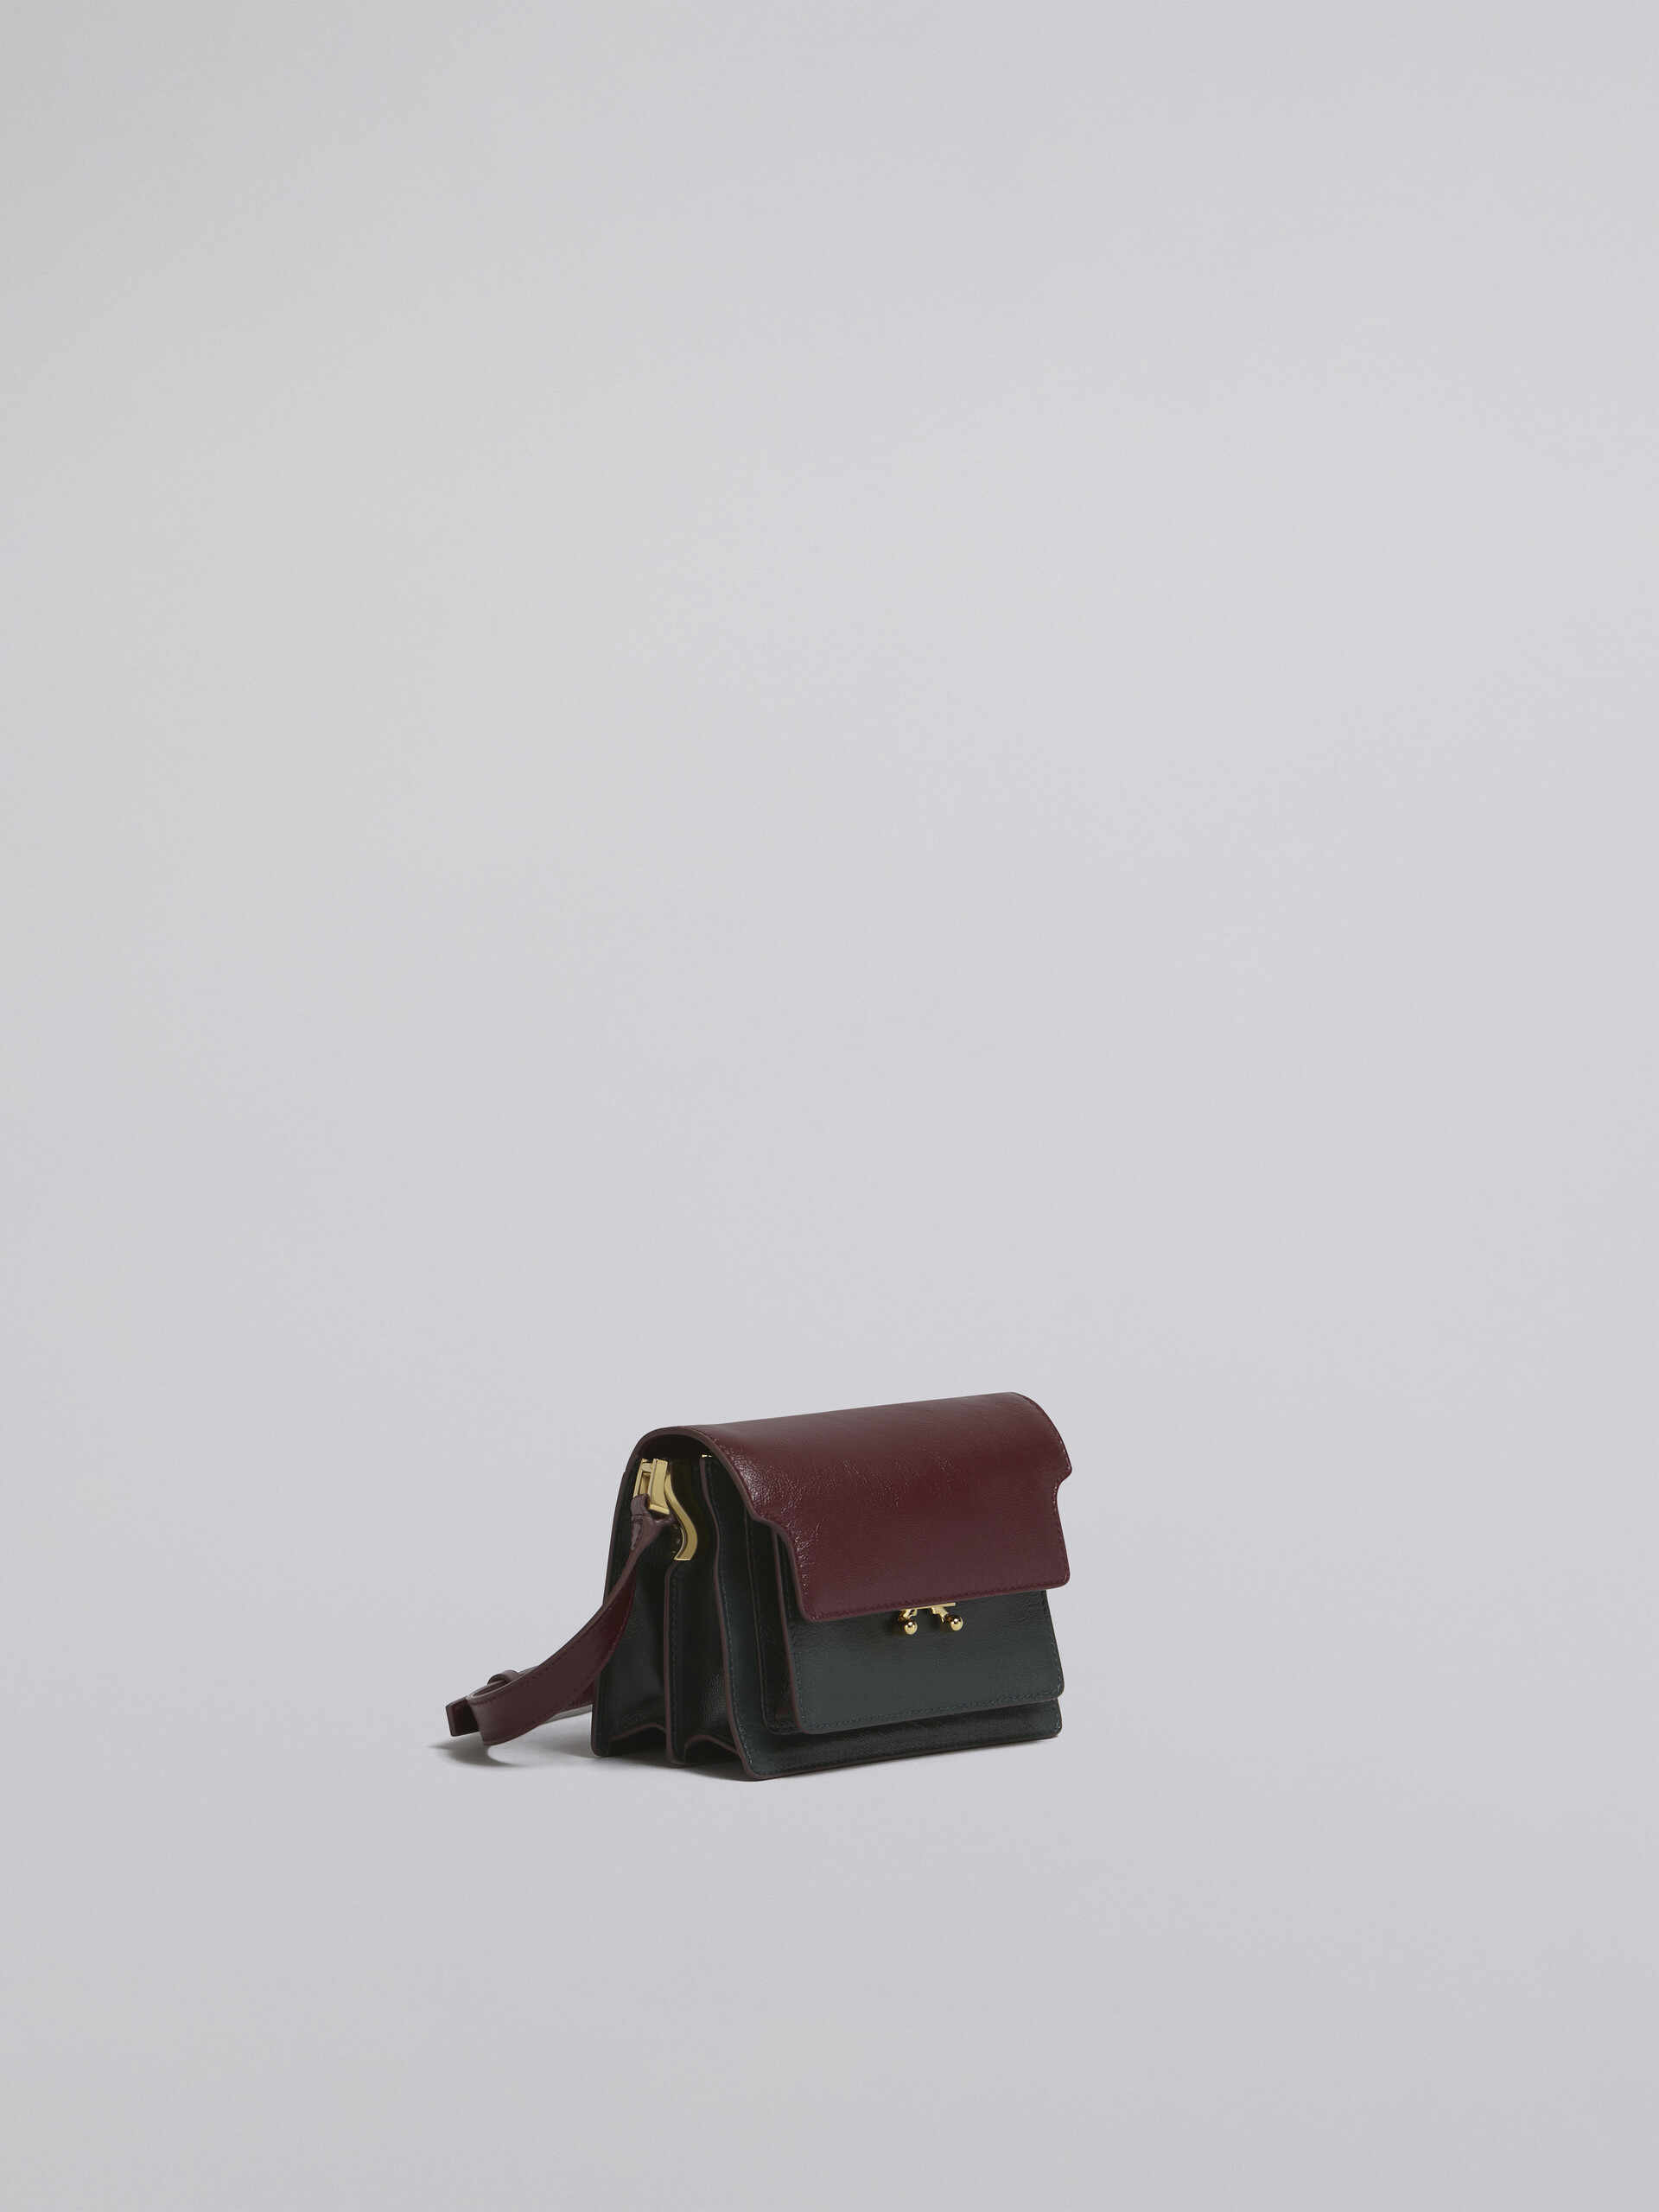 TRUNK SOFT mini bag in green and burgundy leather - Shoulder Bag - Image 5